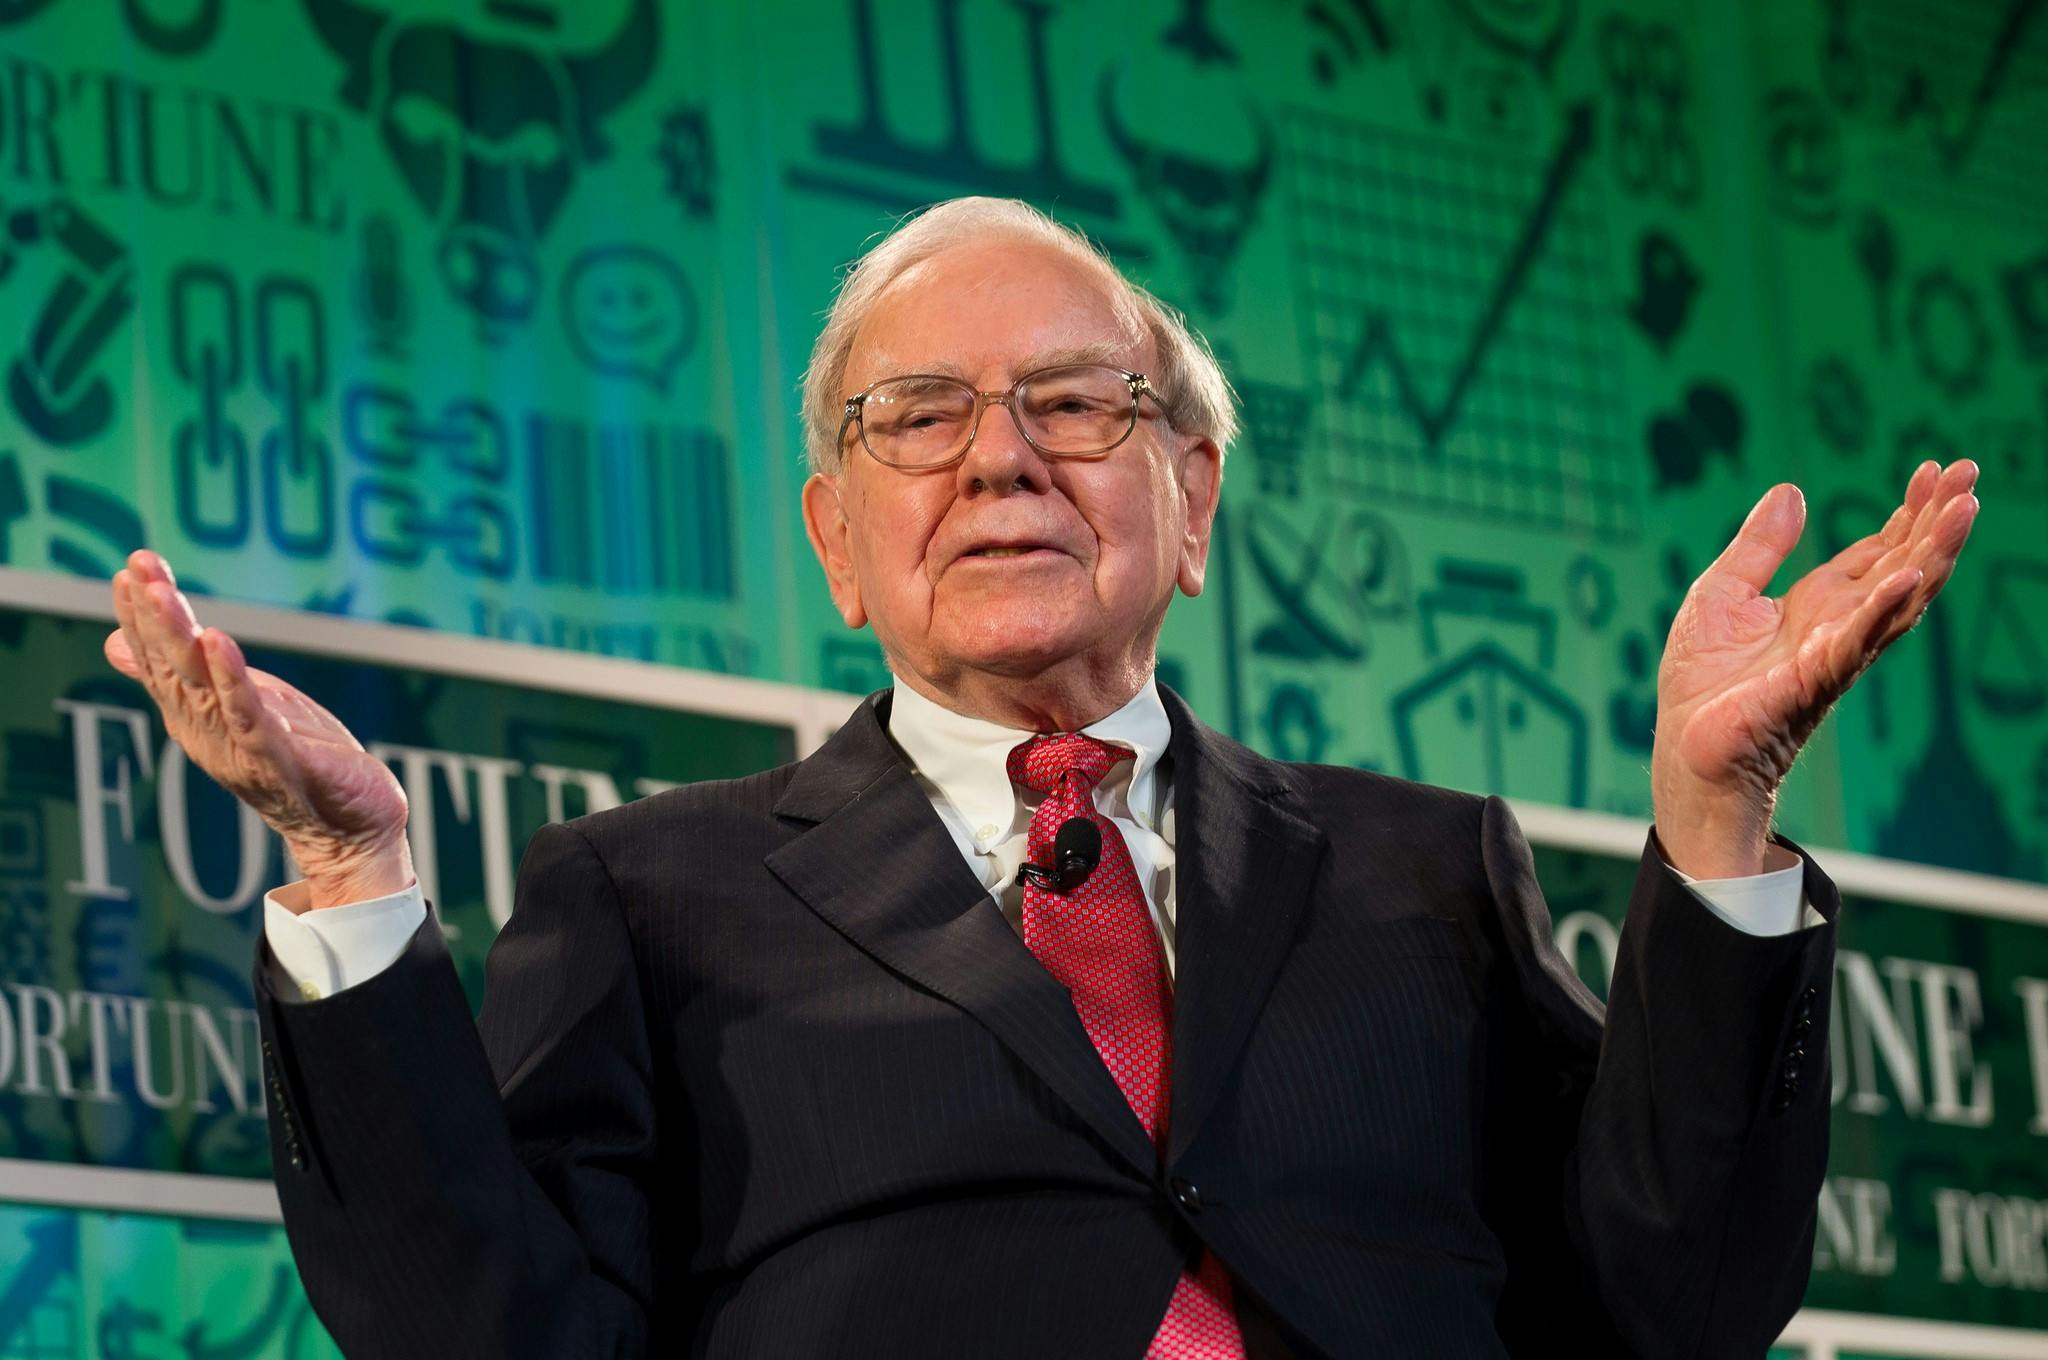 102 Warren Buffett Quotes on Life, Success, & More – blog post image